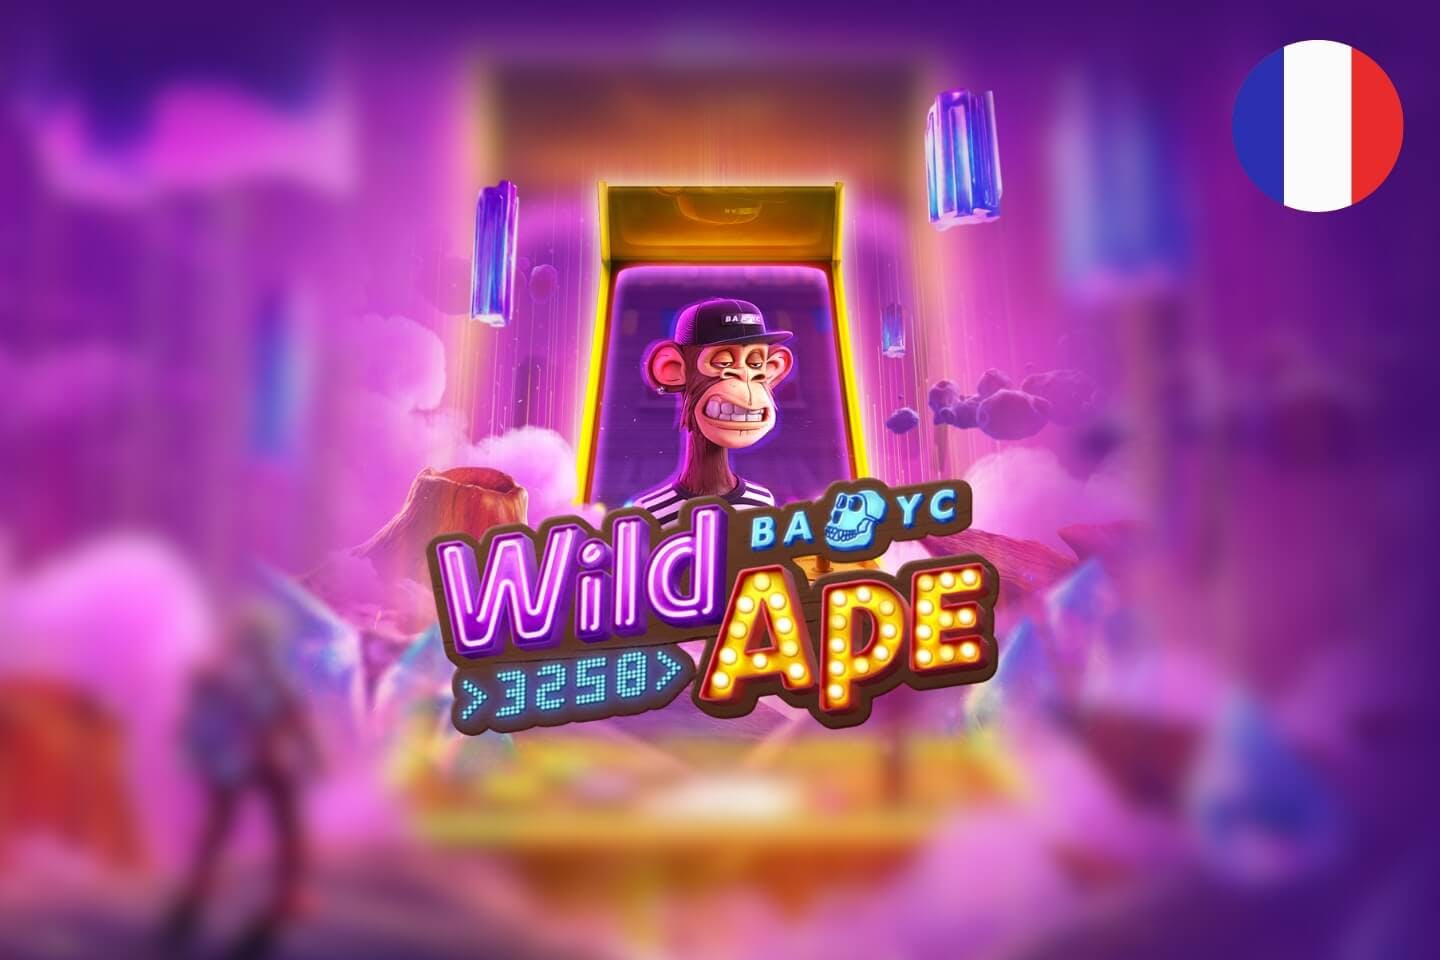 Wild Ape #3258